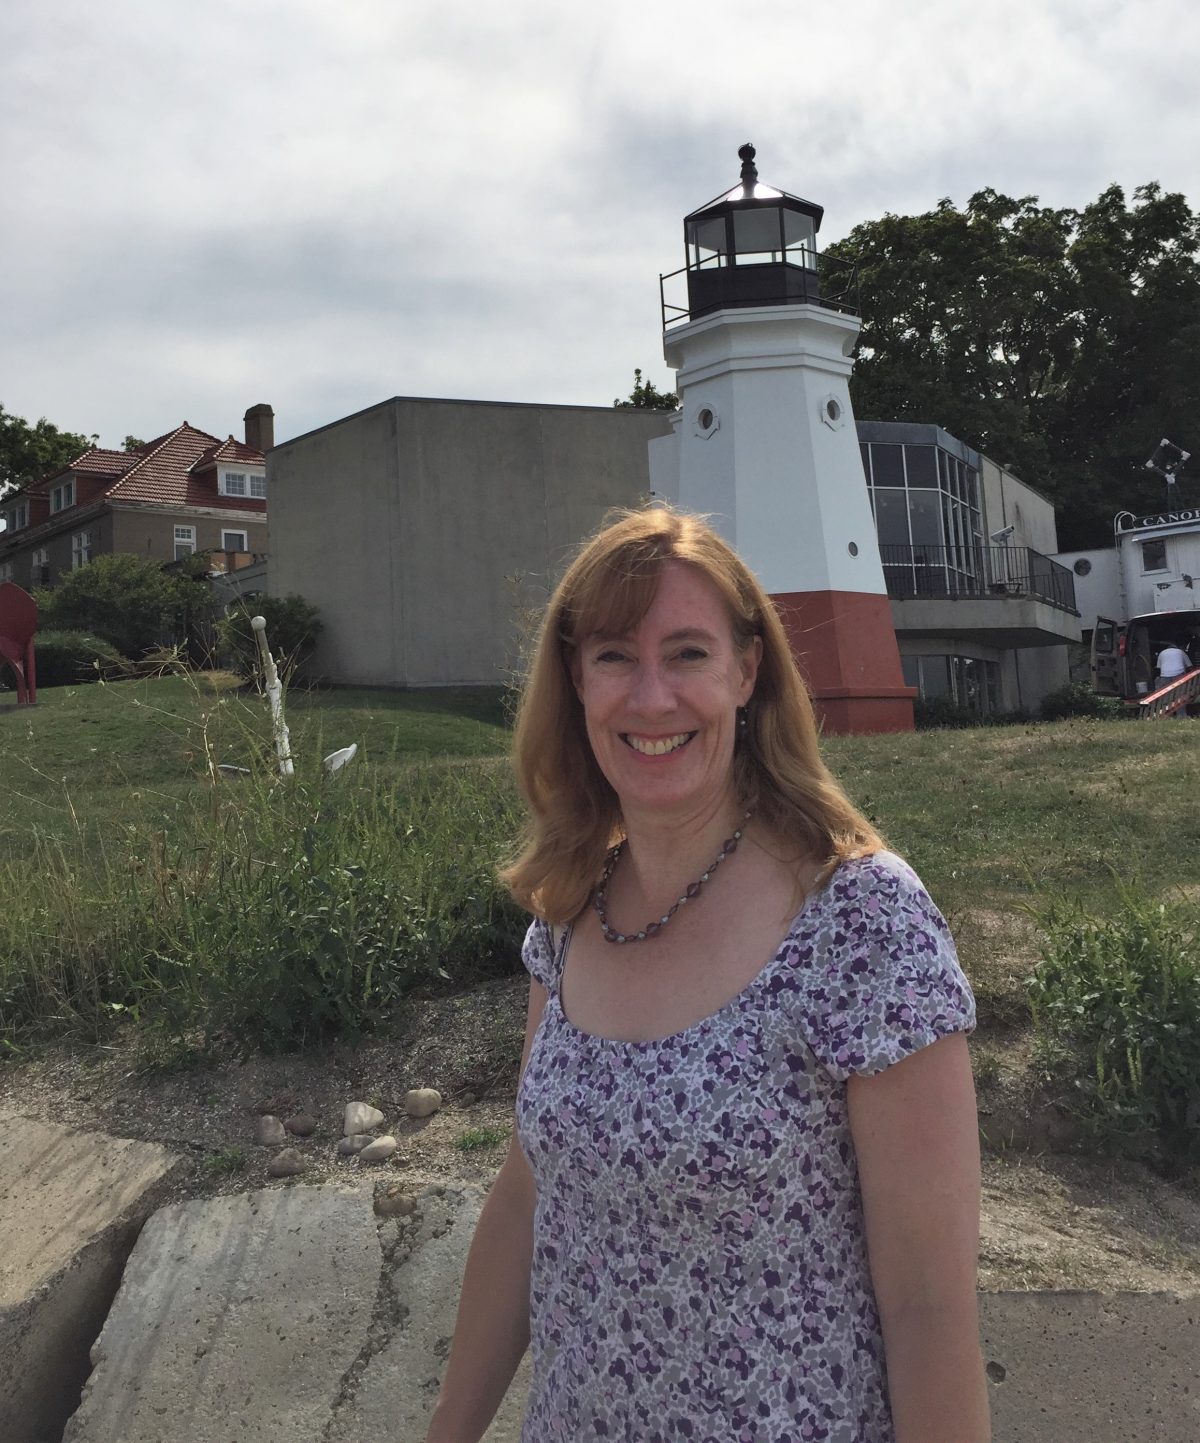 At the Vermilion Lighthouse (Photo: Sarah Sundin, August 2016)